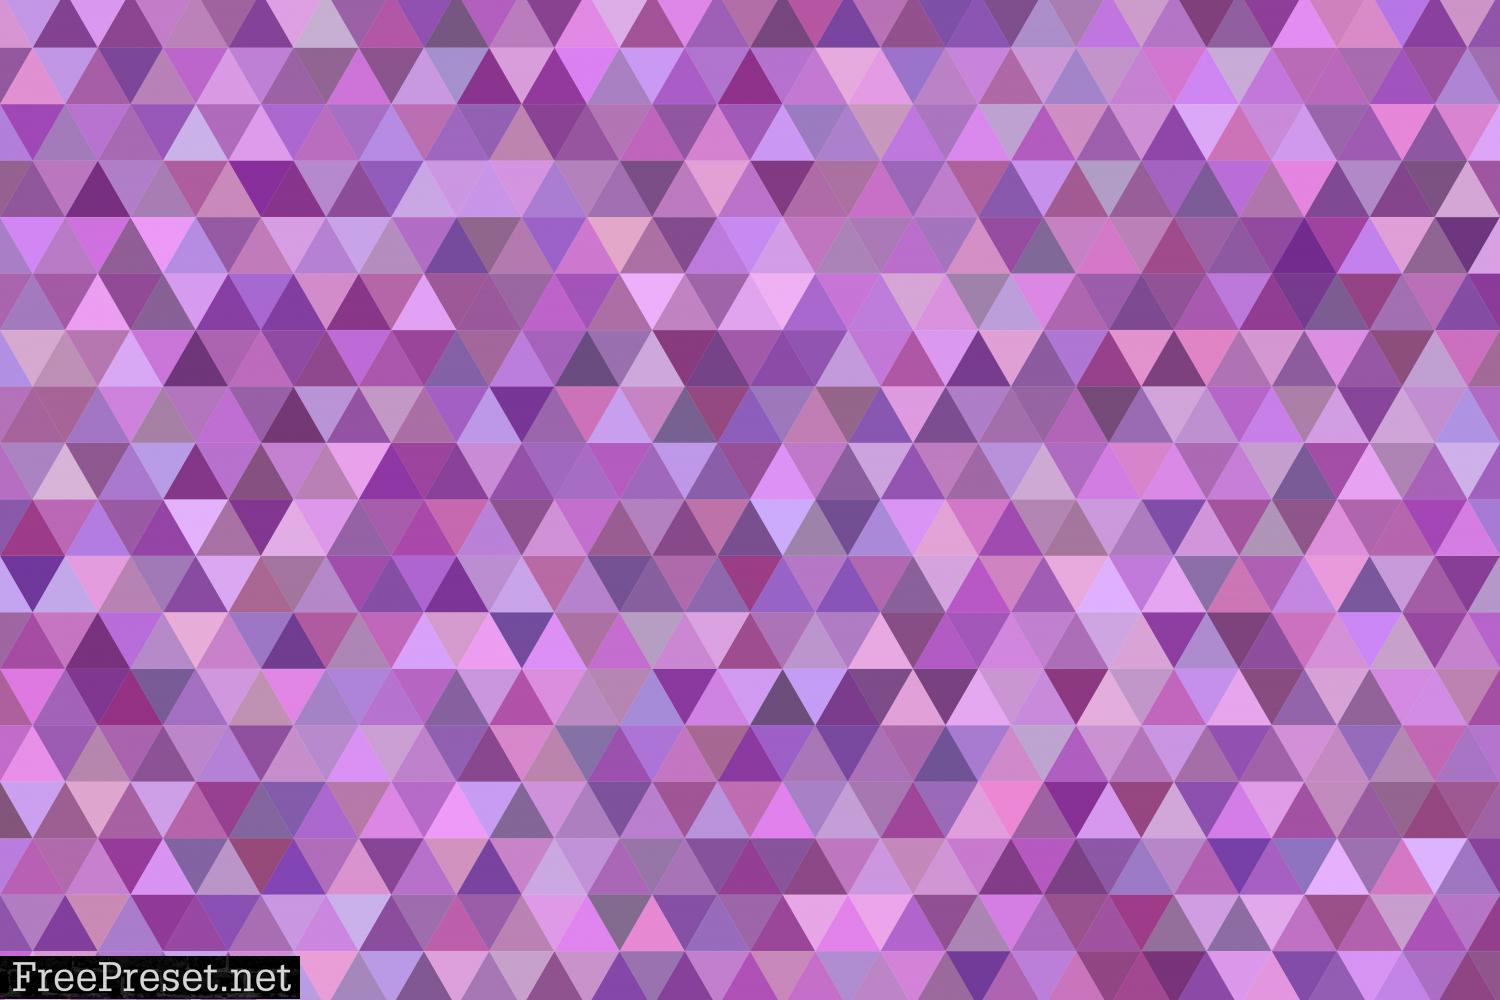 Regular Triangle Background